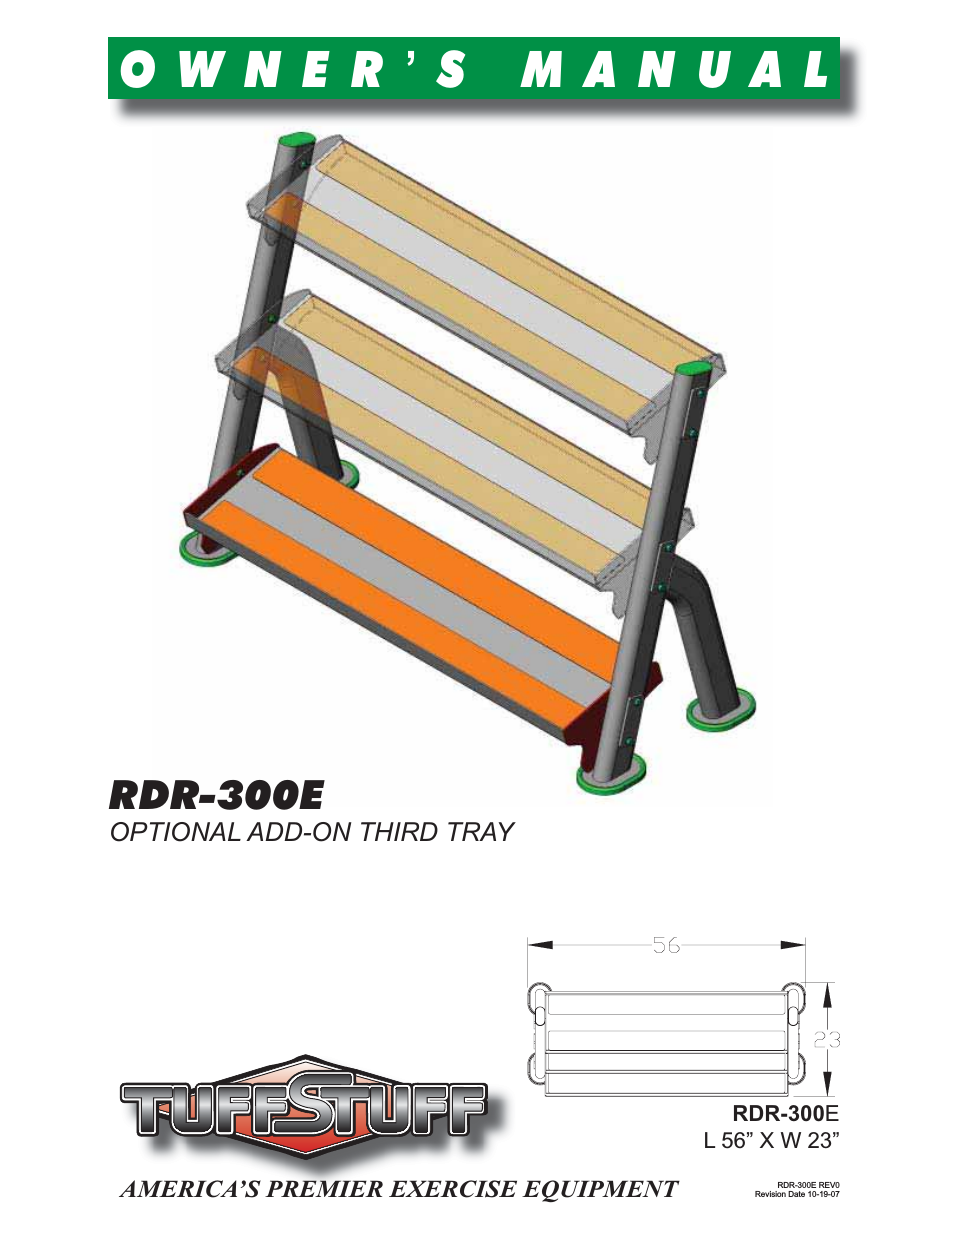 RDR-300E Third Tier Option For RDR-300